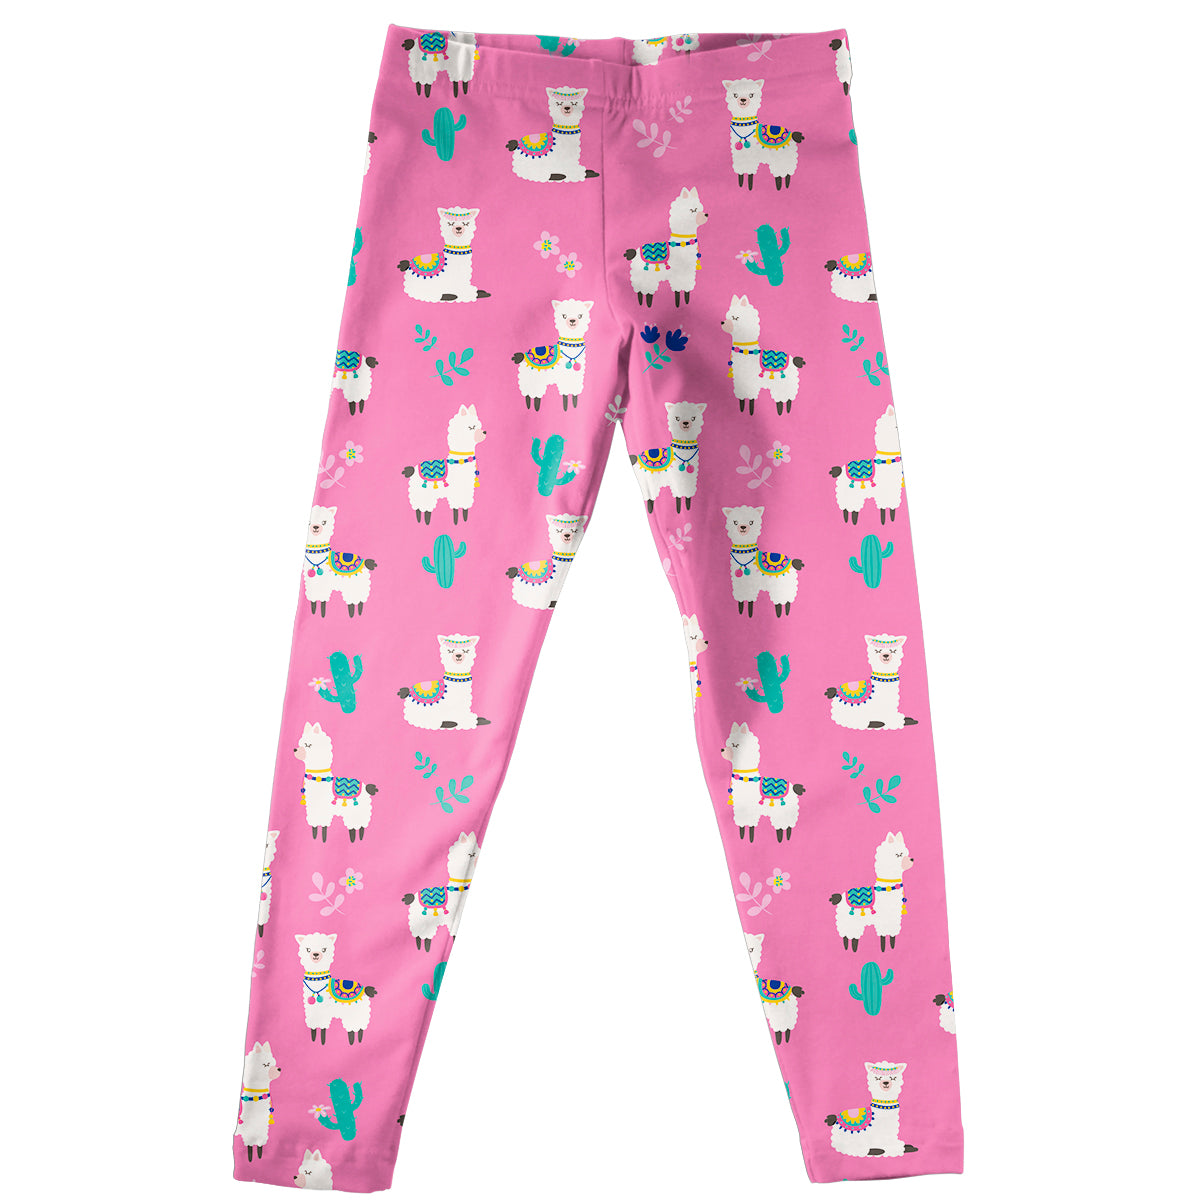 Llamas and cactus hot pink girls leggings - Wimziy&Co.